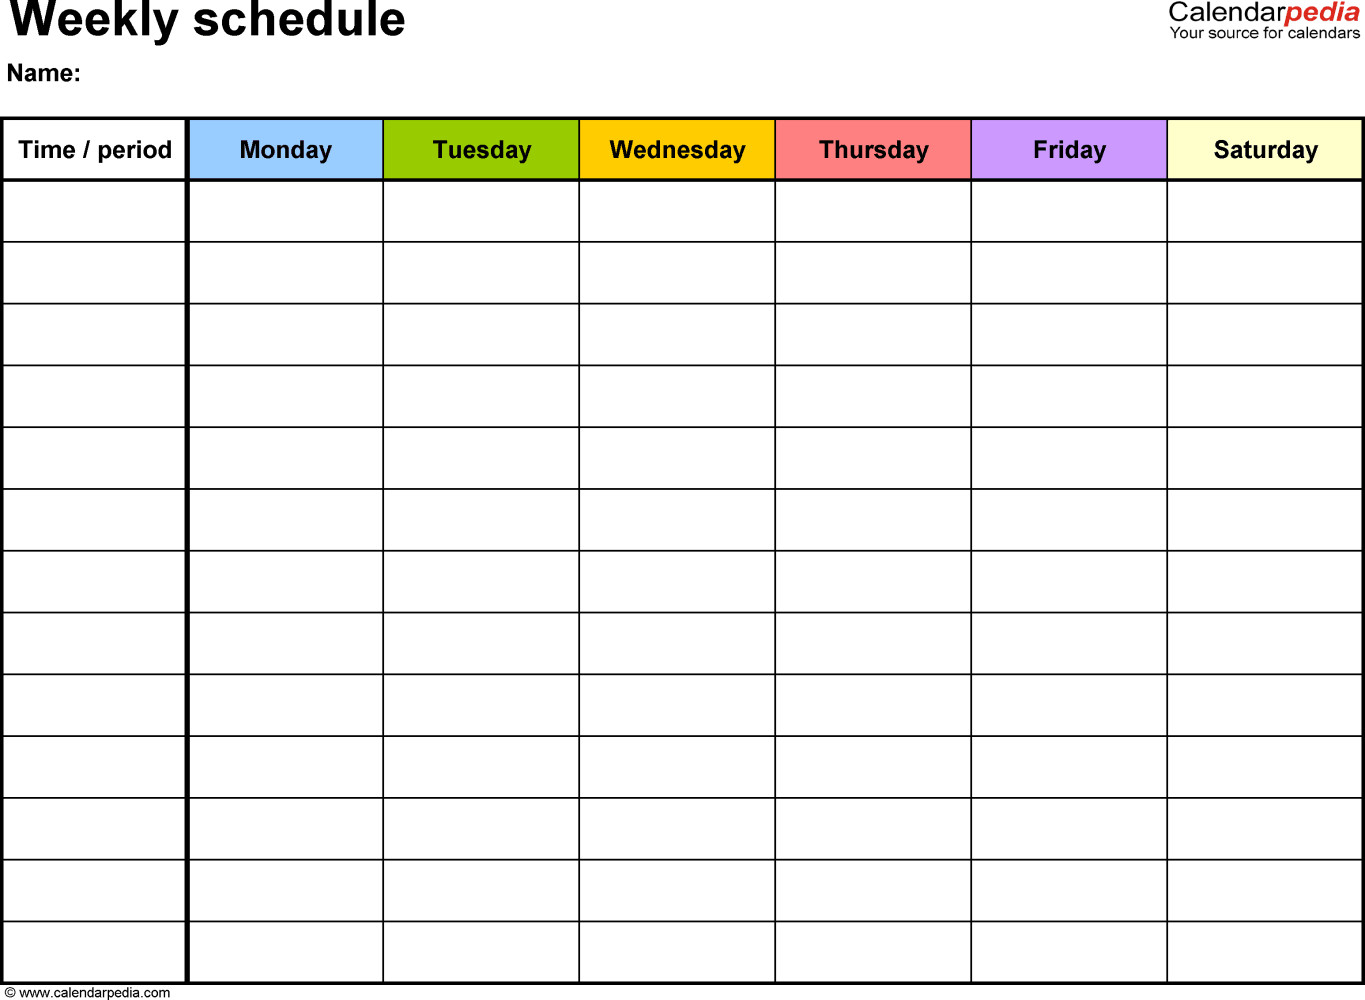 Hourly Schedule Template Excel Hourly Schedule Template Excel